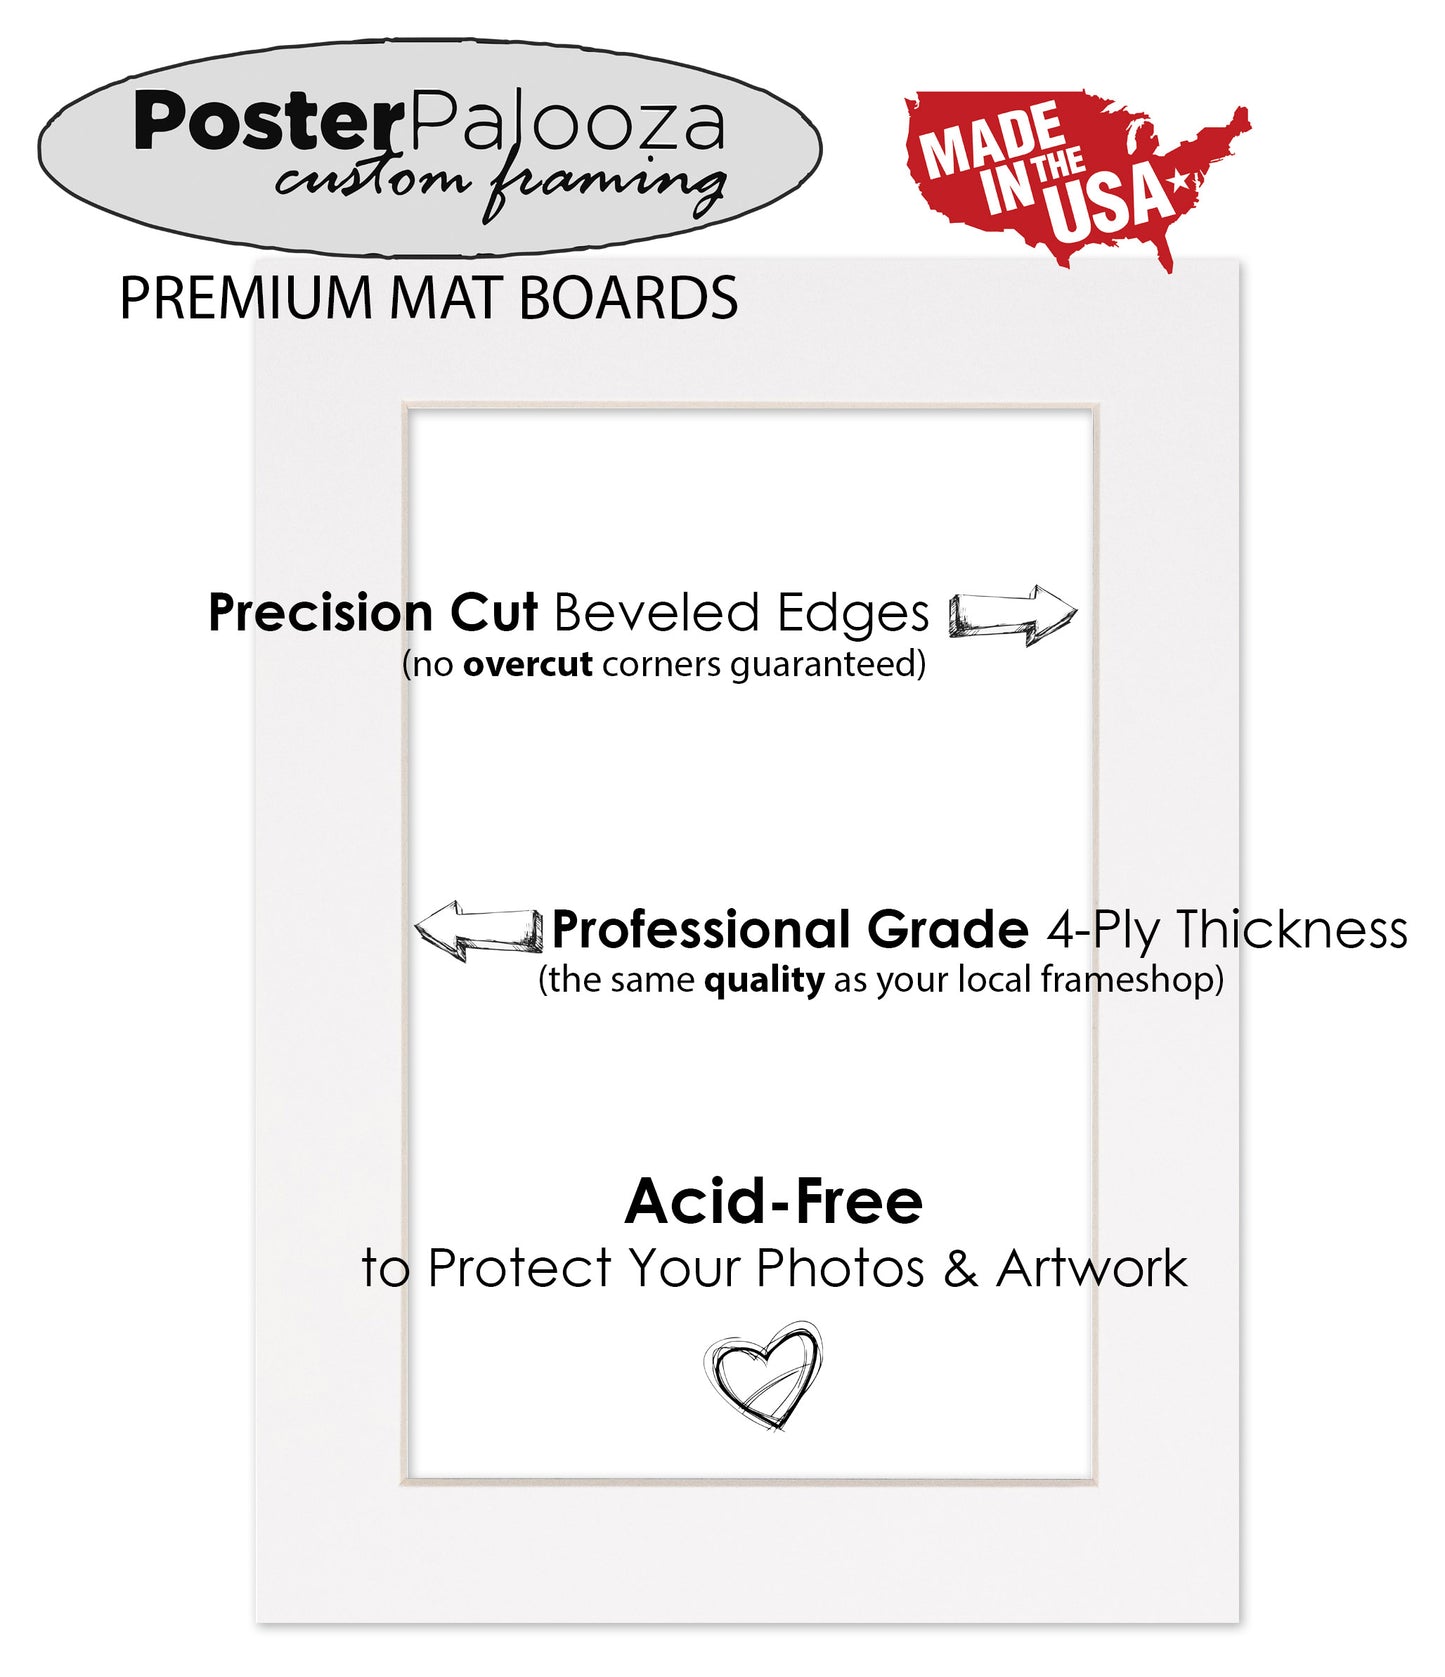 Pack of 25 Brown Suede Precut Acid-Free Matboards